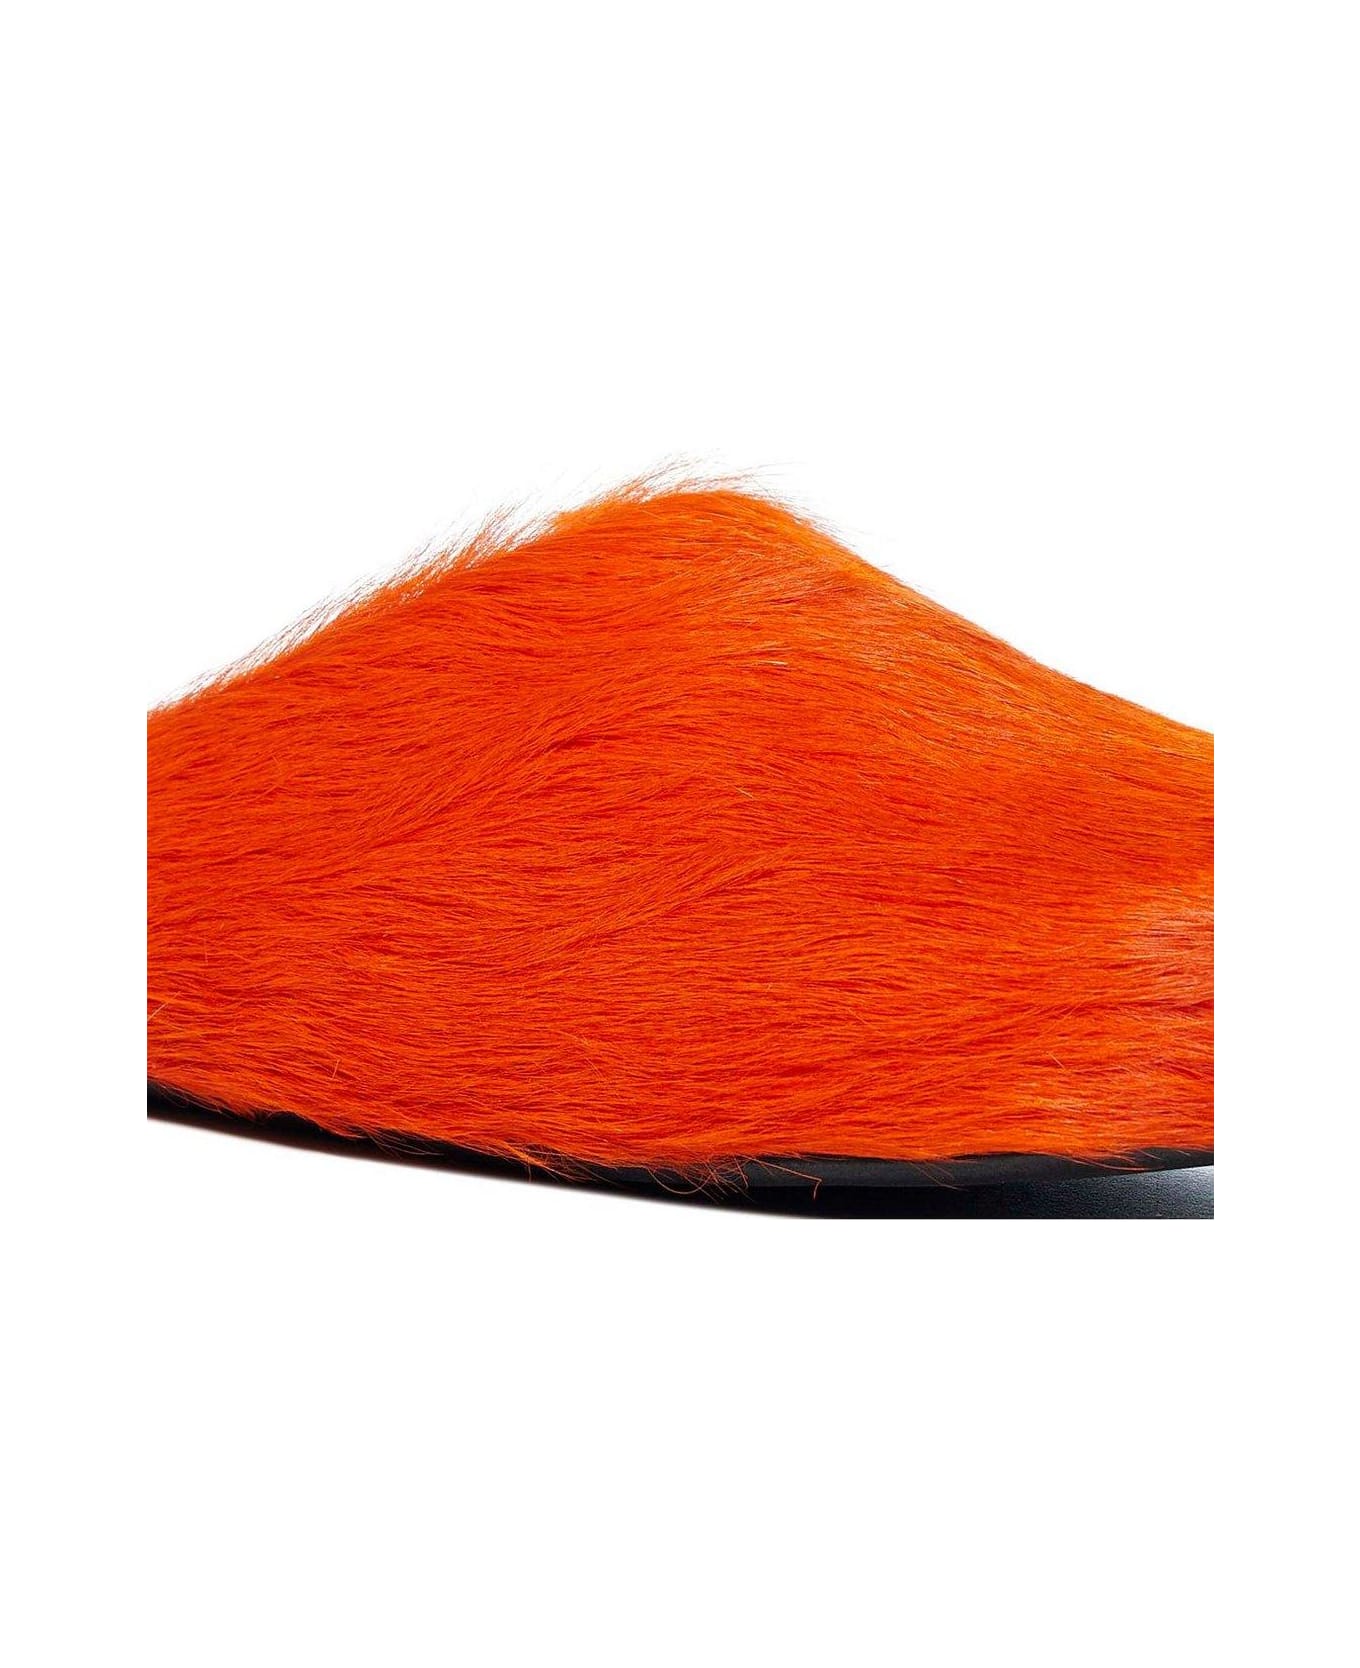 Marni Fussbett Textured Mules - Orange